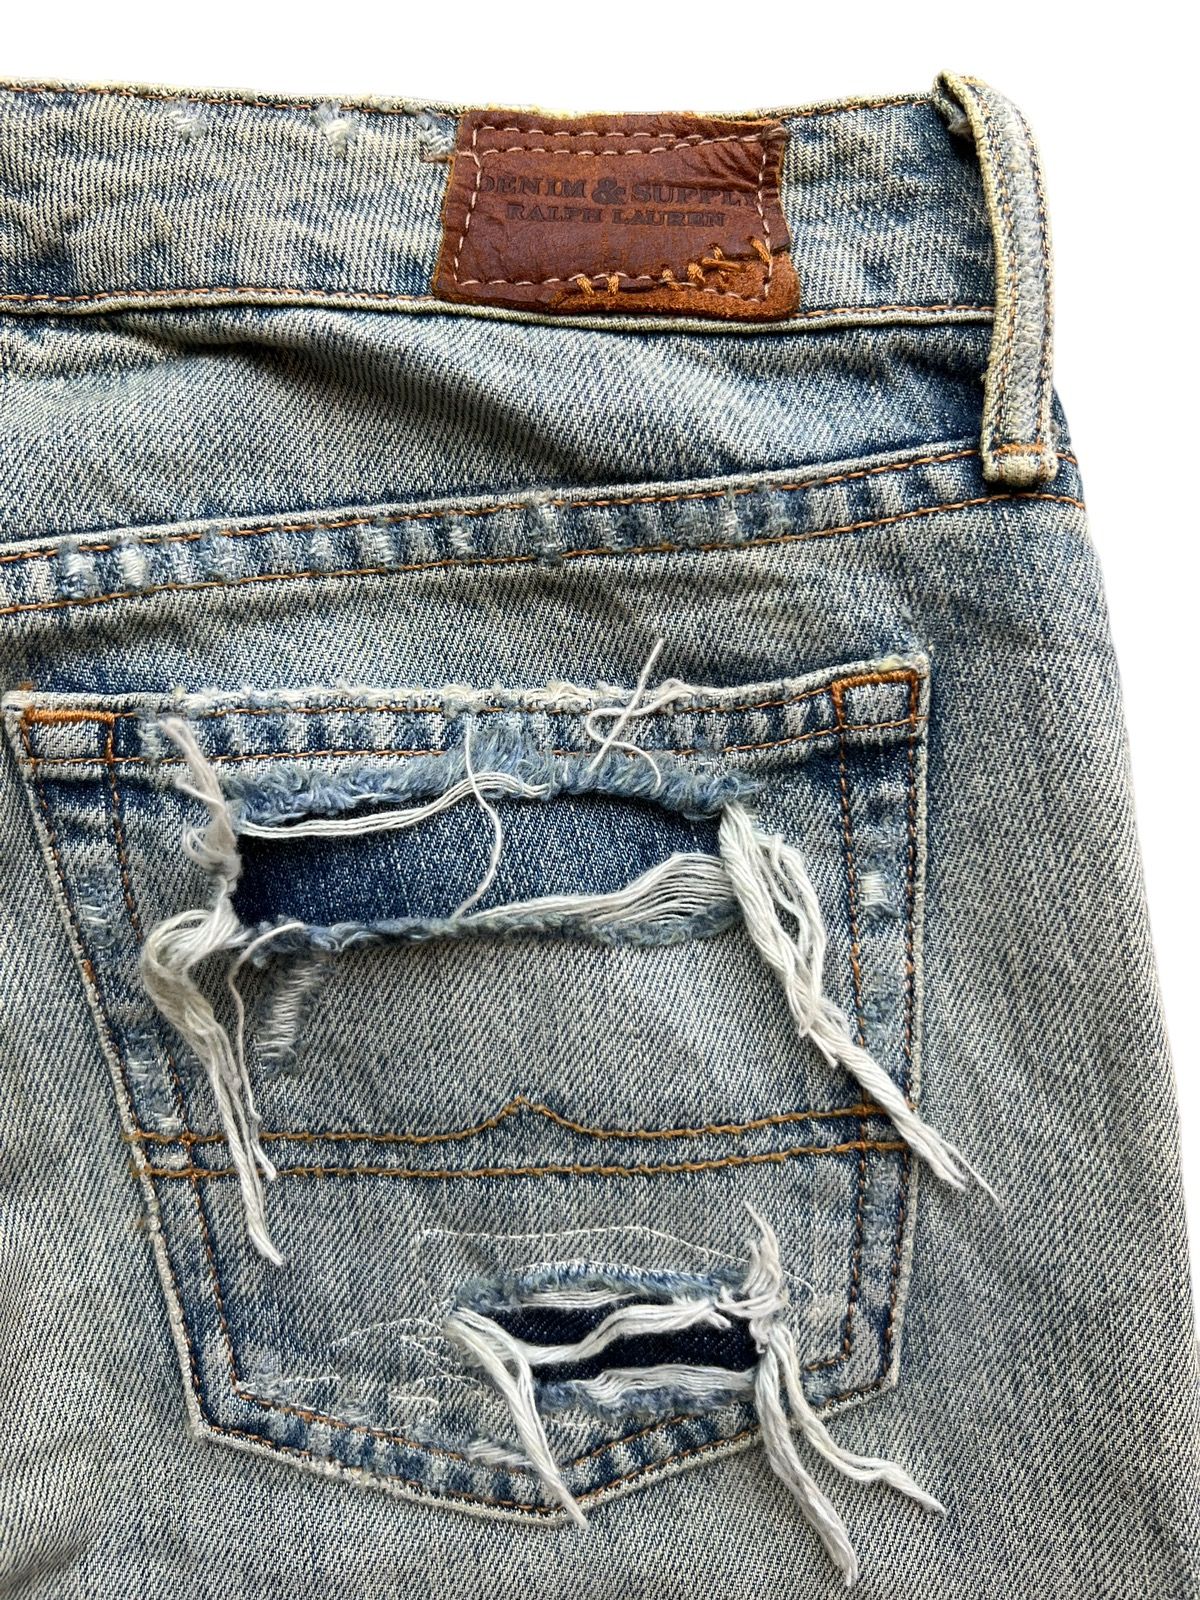 Ralph Lauren Rusty Ripped Distressed Denim Jeans 28x29 - 12